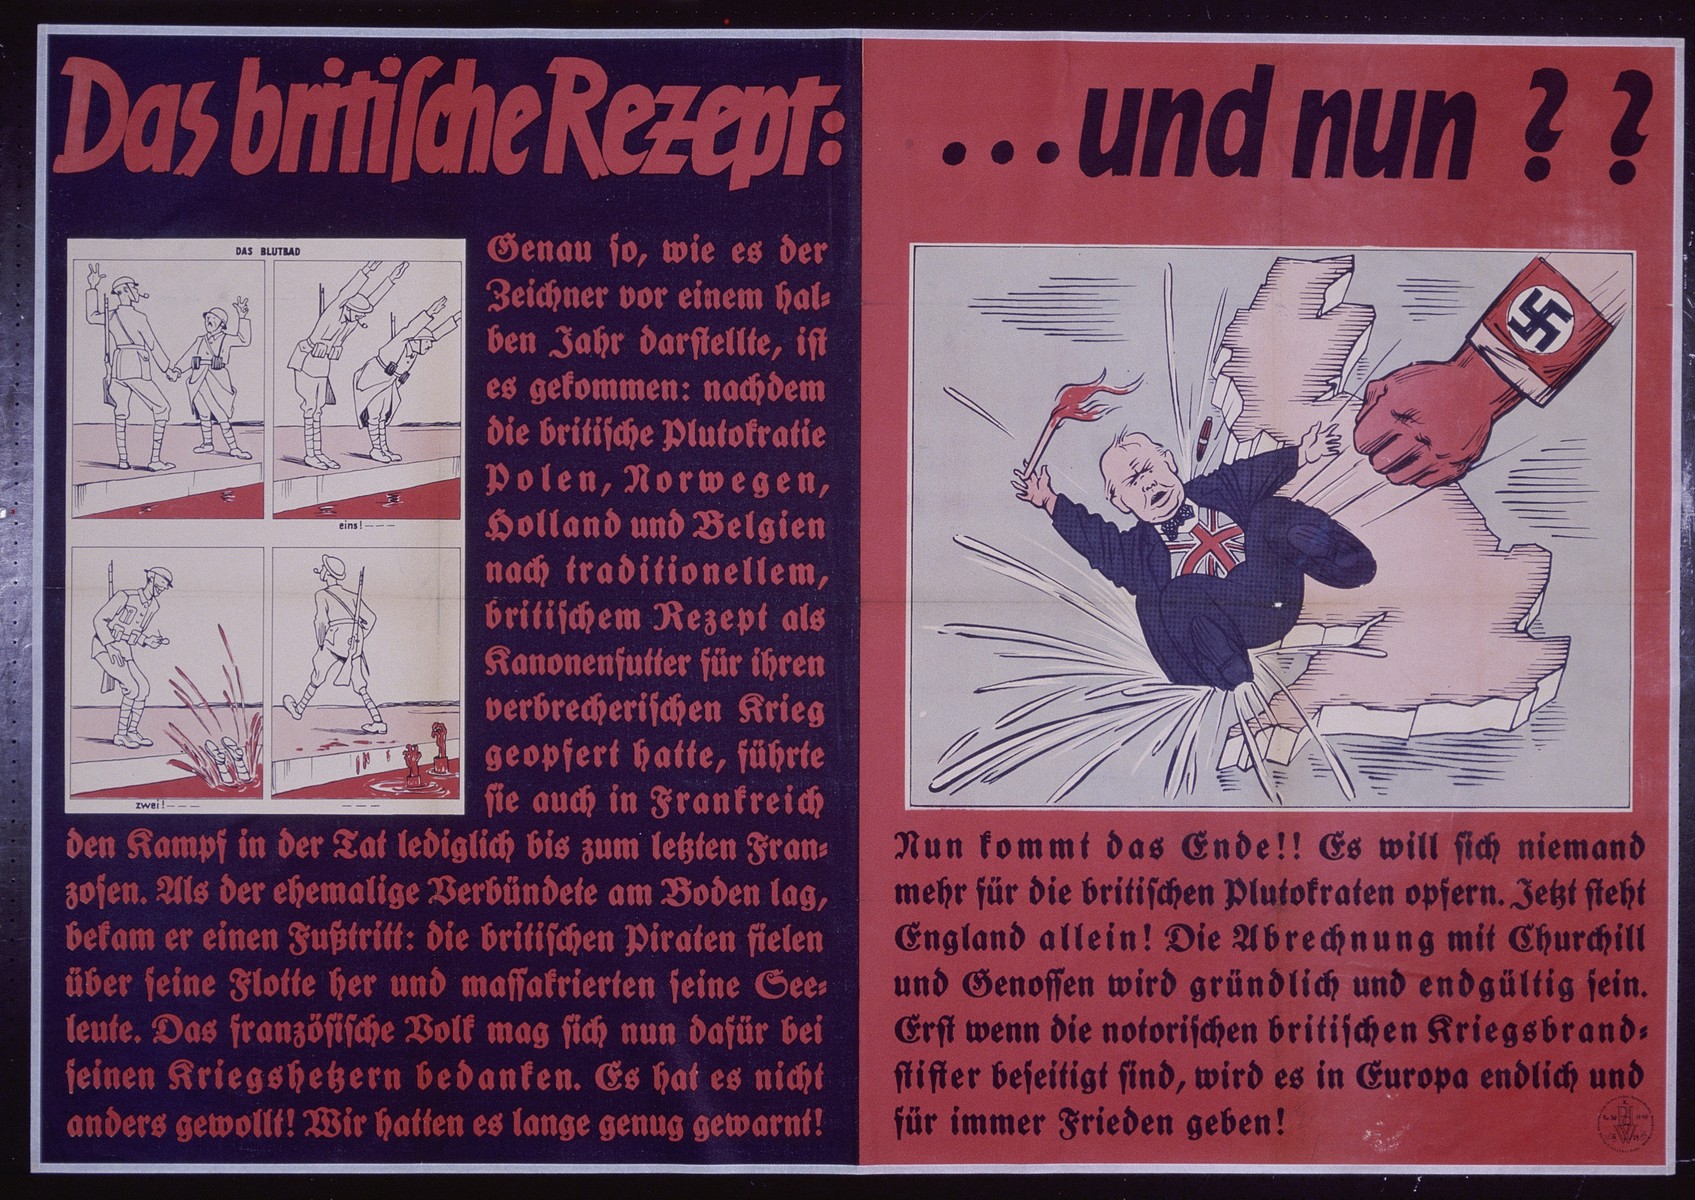 Nazi propaganda poster entitled, "Das britische Rezept...und nun?", issued by the "Parole der Woche," a wall newspaper (Wandzeitung) published by the National Socialist Party propaganda office in Munich.